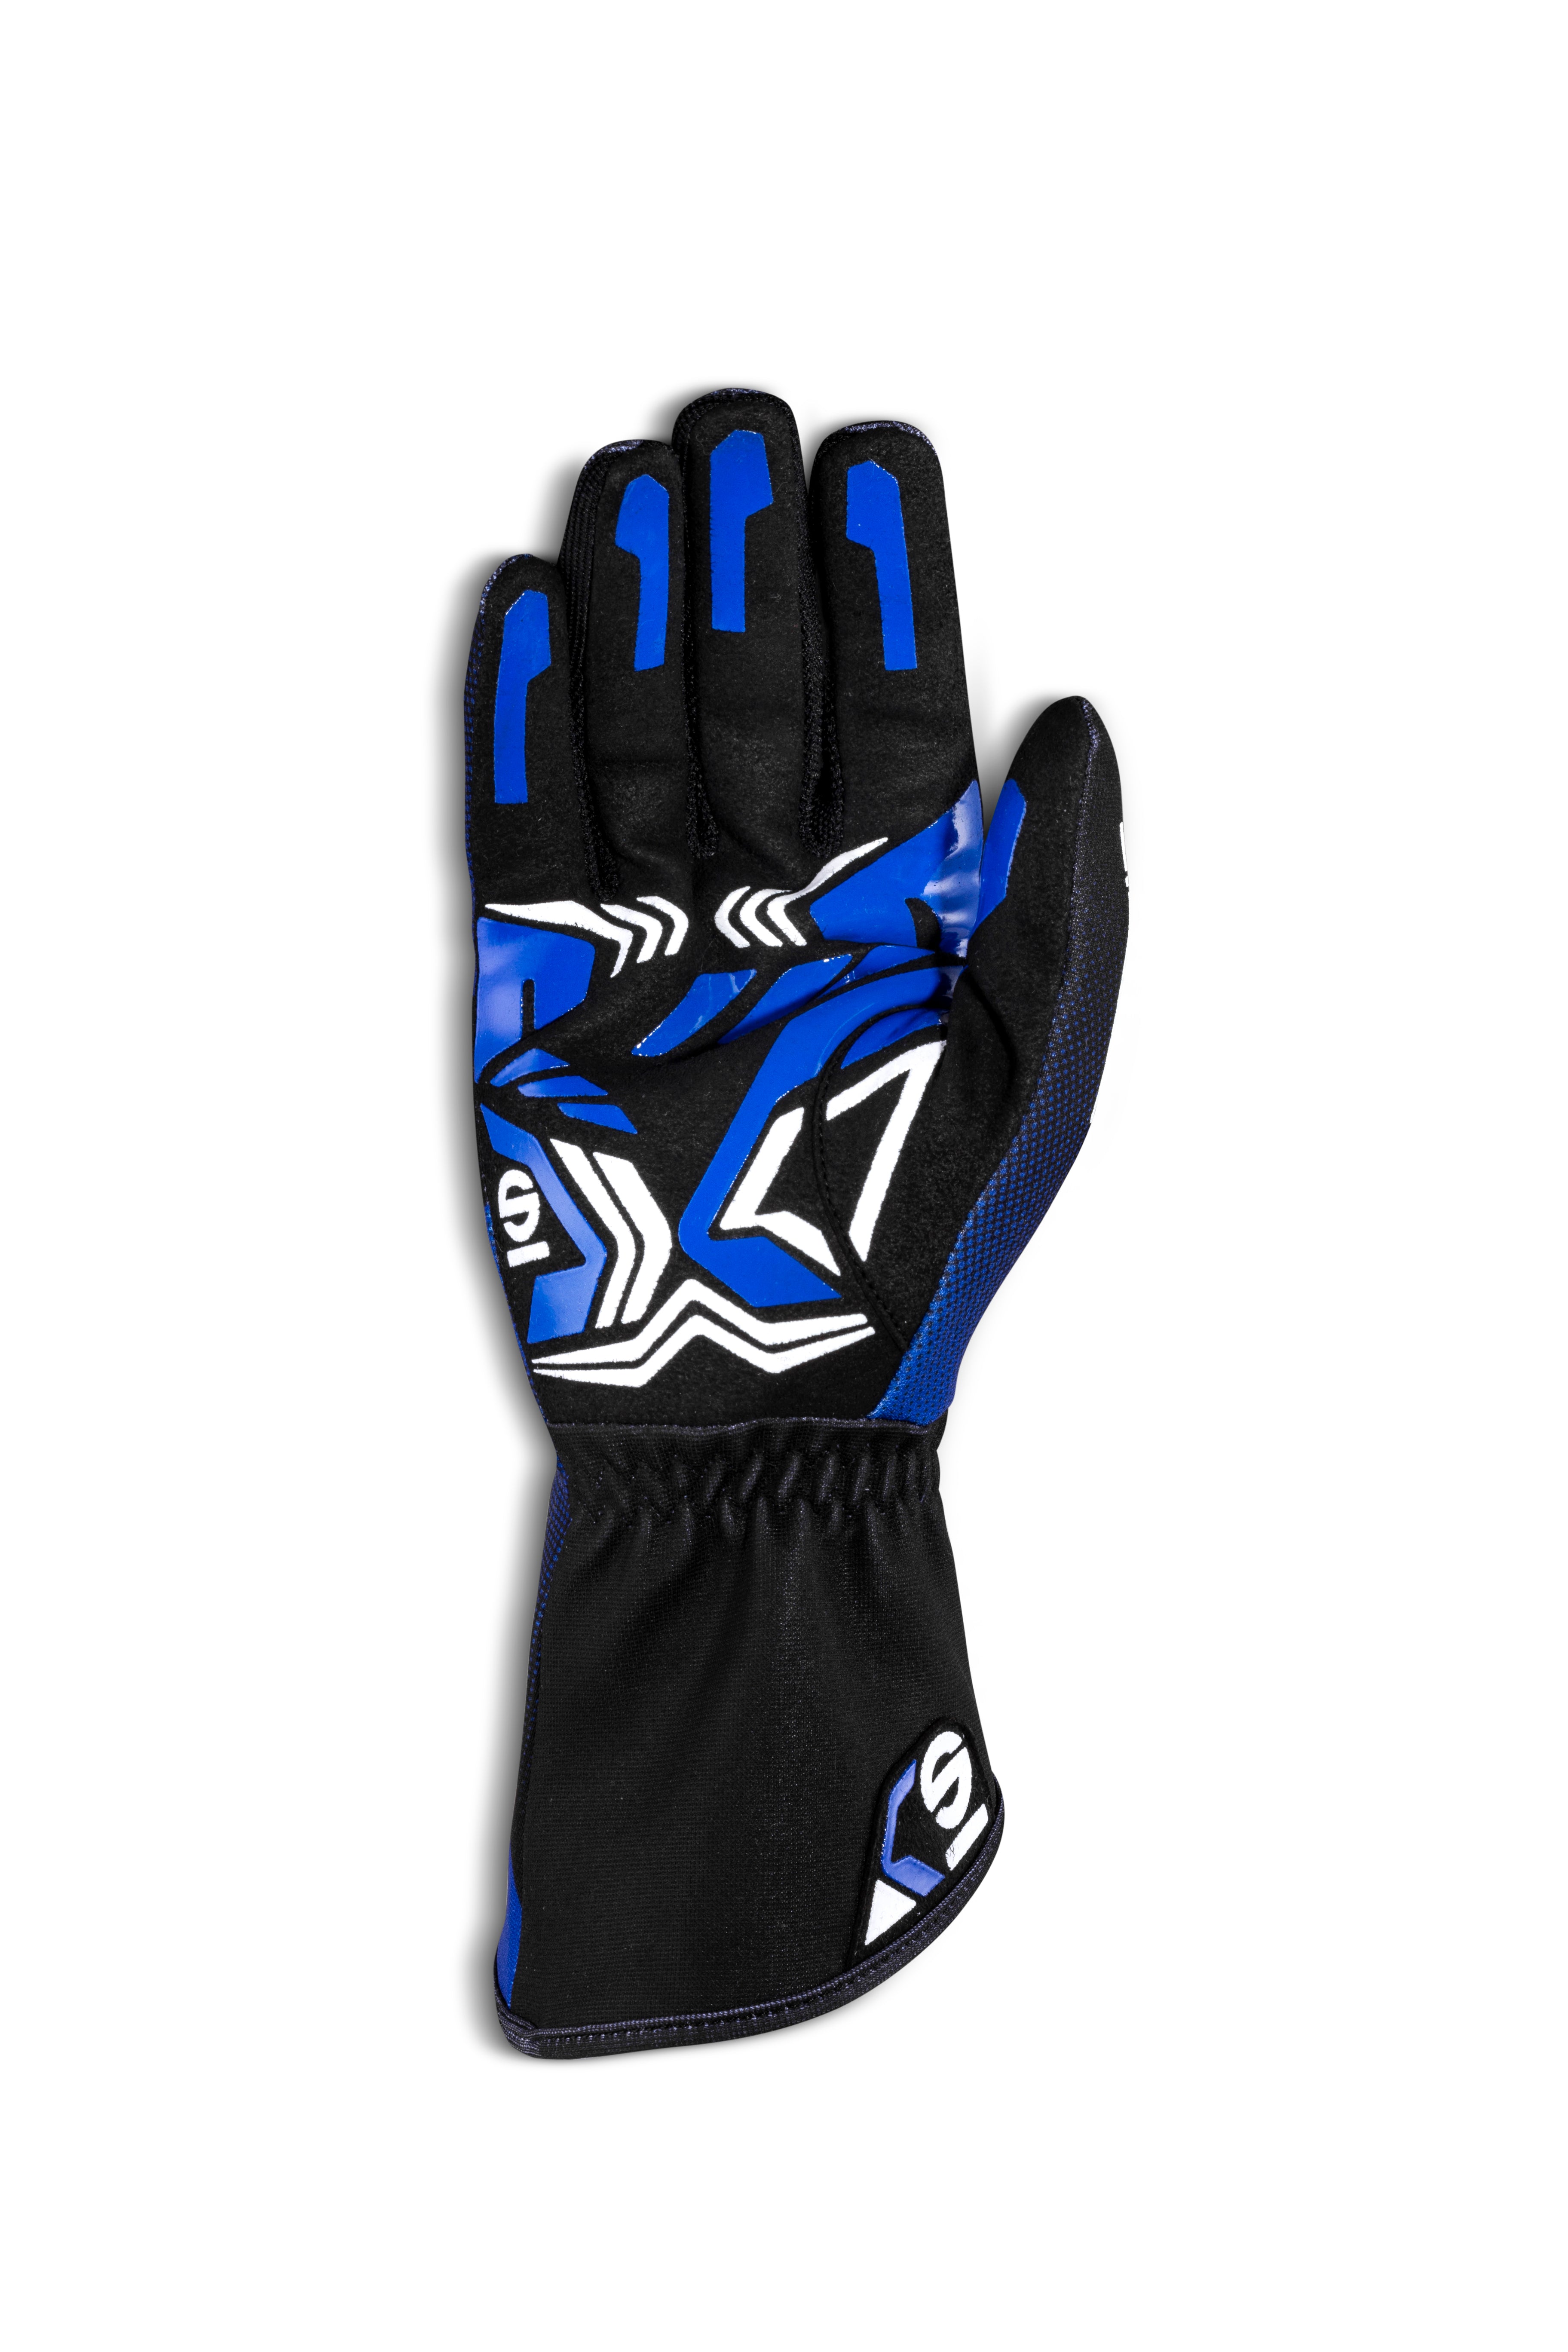 SPARCO 00255608BXNR Kart gloves RUSH, blue/black, size 8 Photo-1 